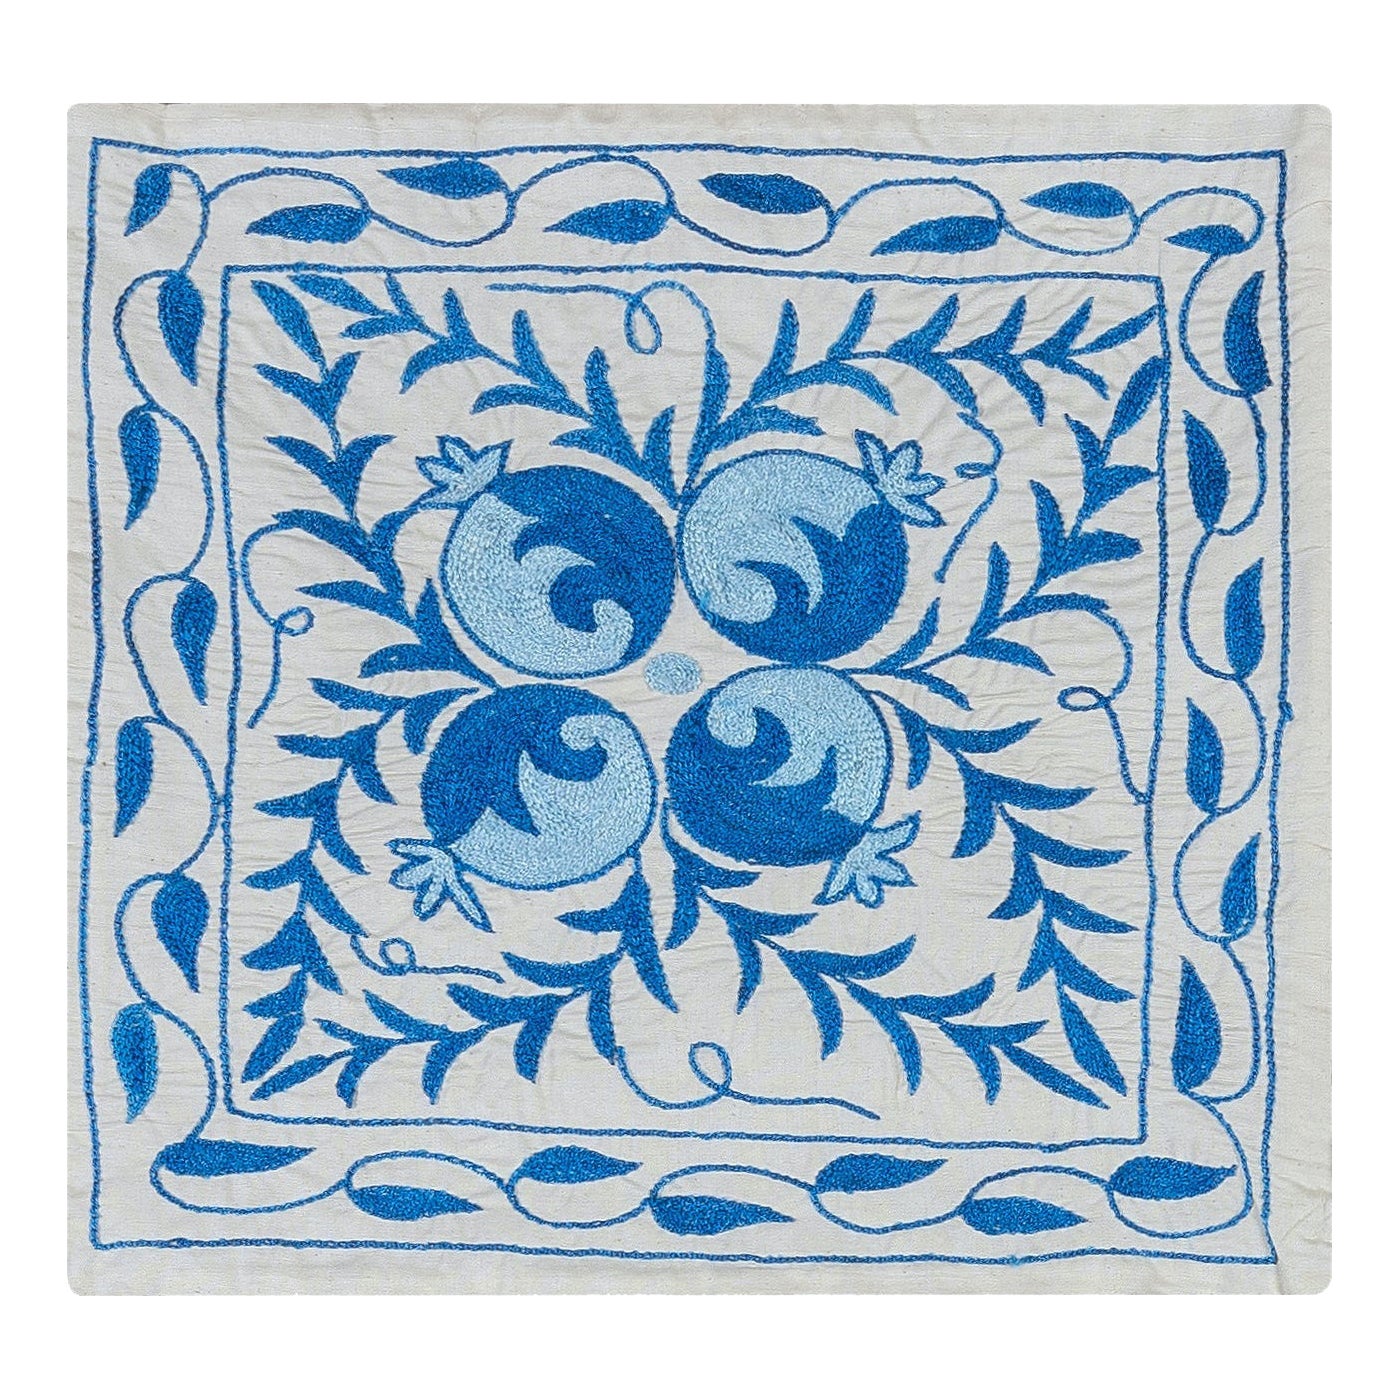 18"x19" Silk Embroidery Suzani Cushion Cover in Cream & Blue, Suzani Lace Pillow